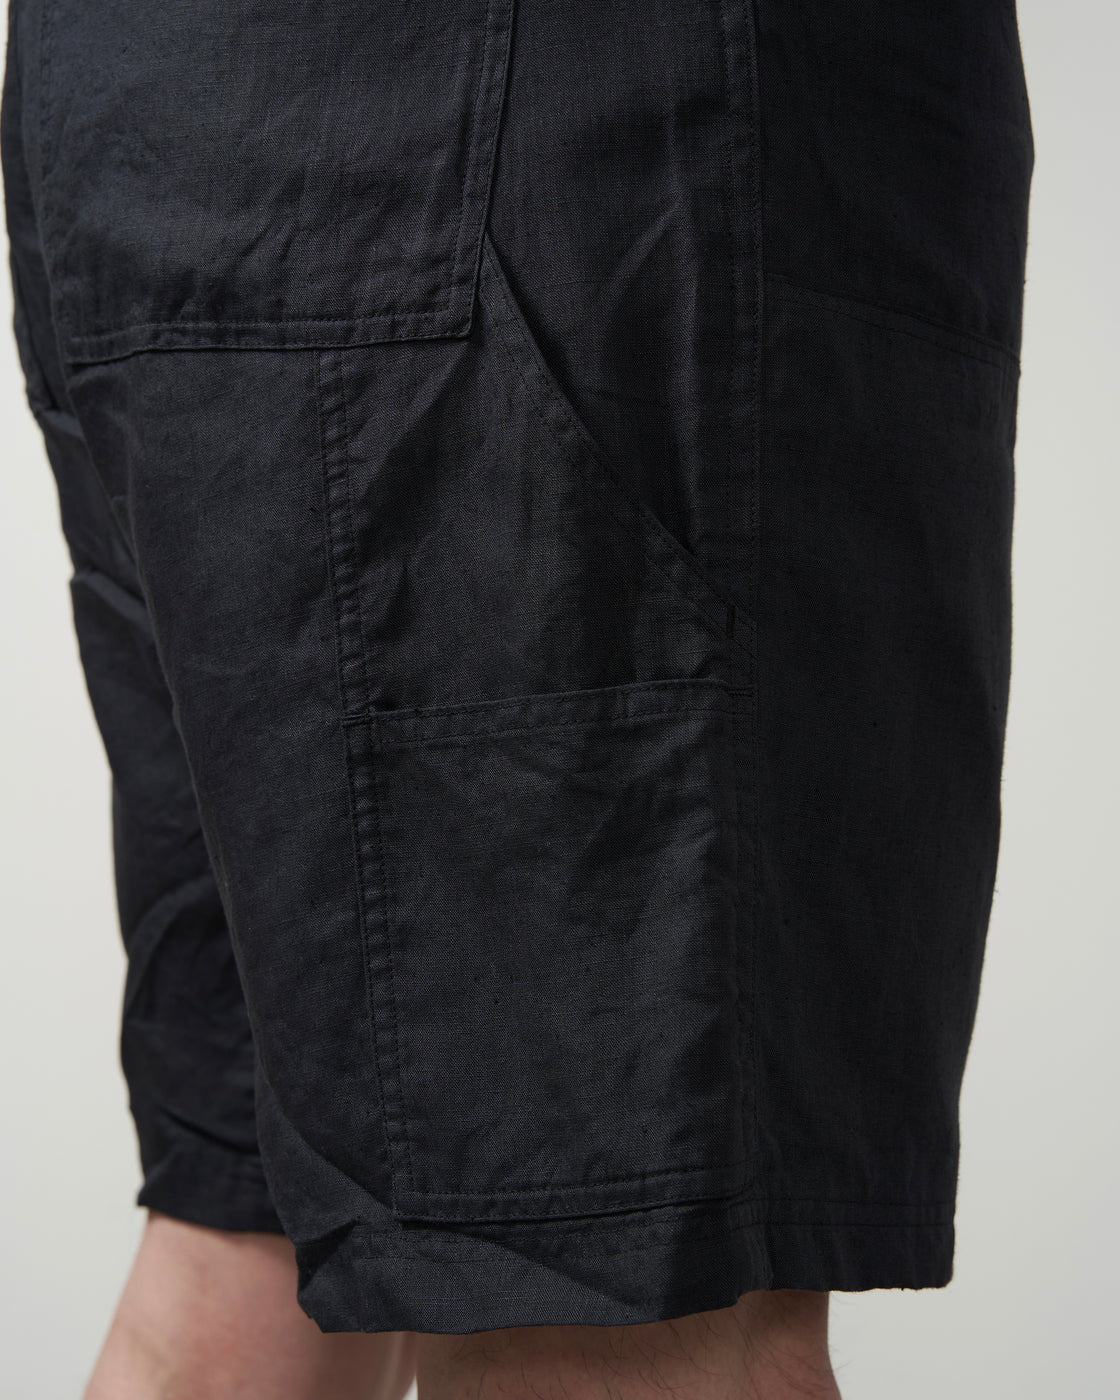 S H DKNS-004 Double Knee Shorts(Linen Garment Dye), Ink Black